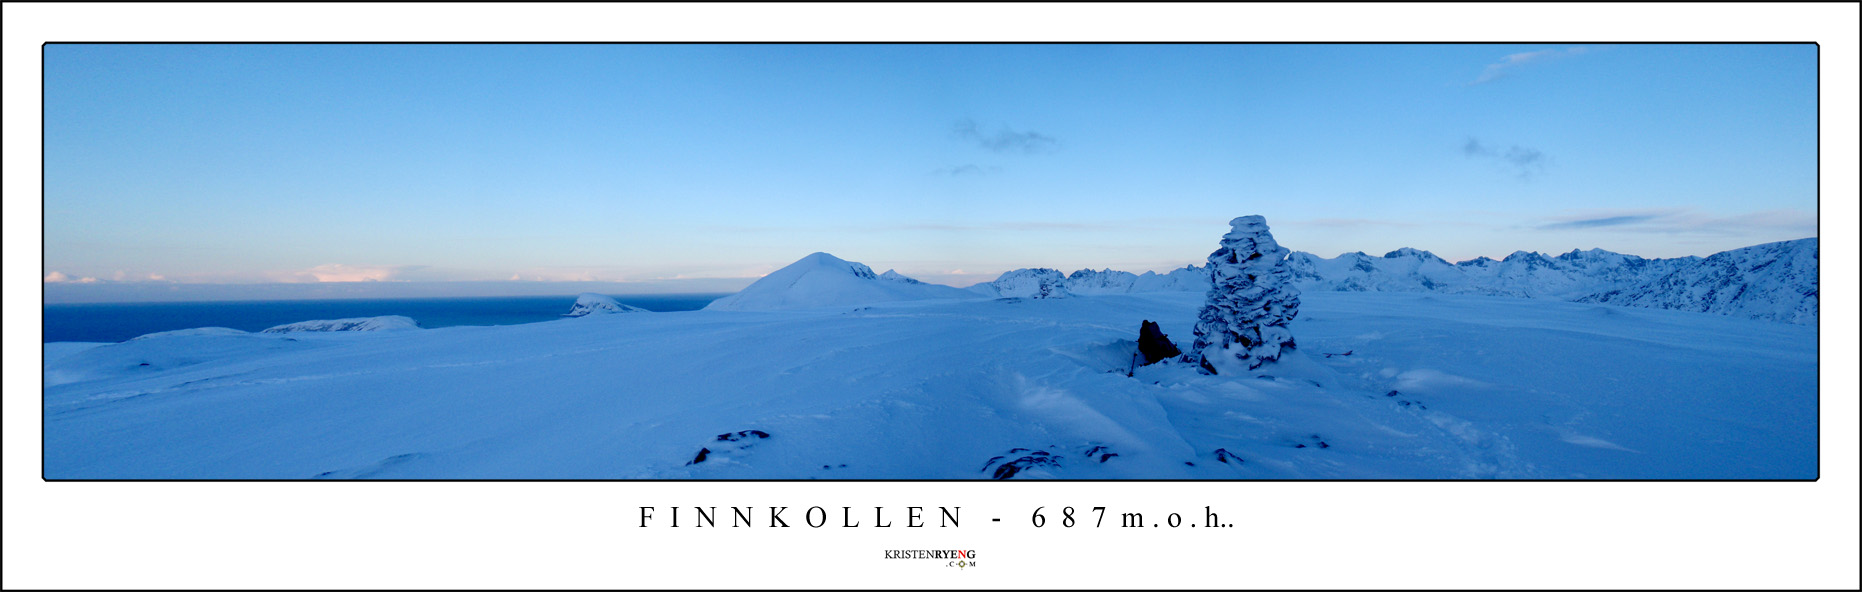 Panorama Finnkollen.jpg - Panoramautsikt fra toppen av Finnkollen.